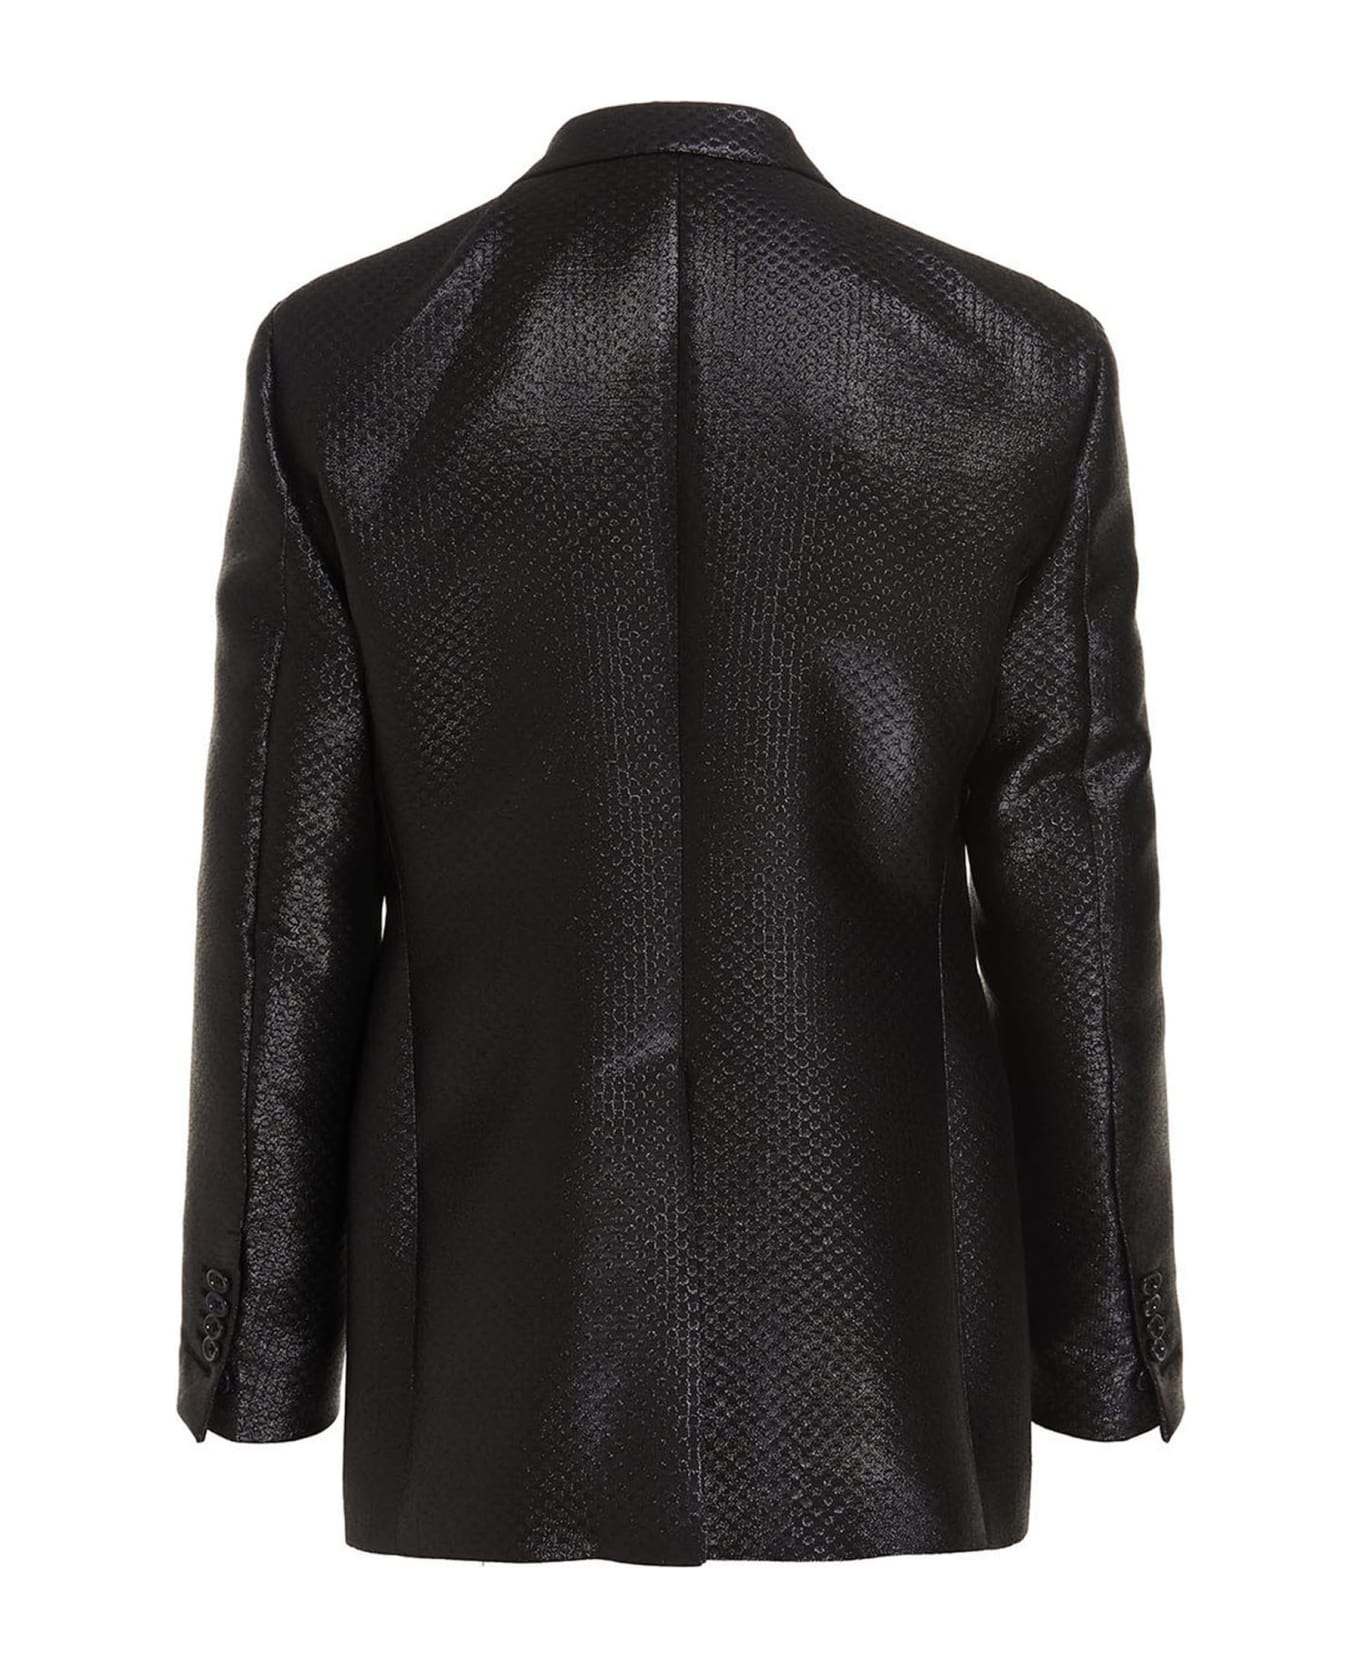 Tom Ford Metalized Single Breast Blazer Jacket - Black  